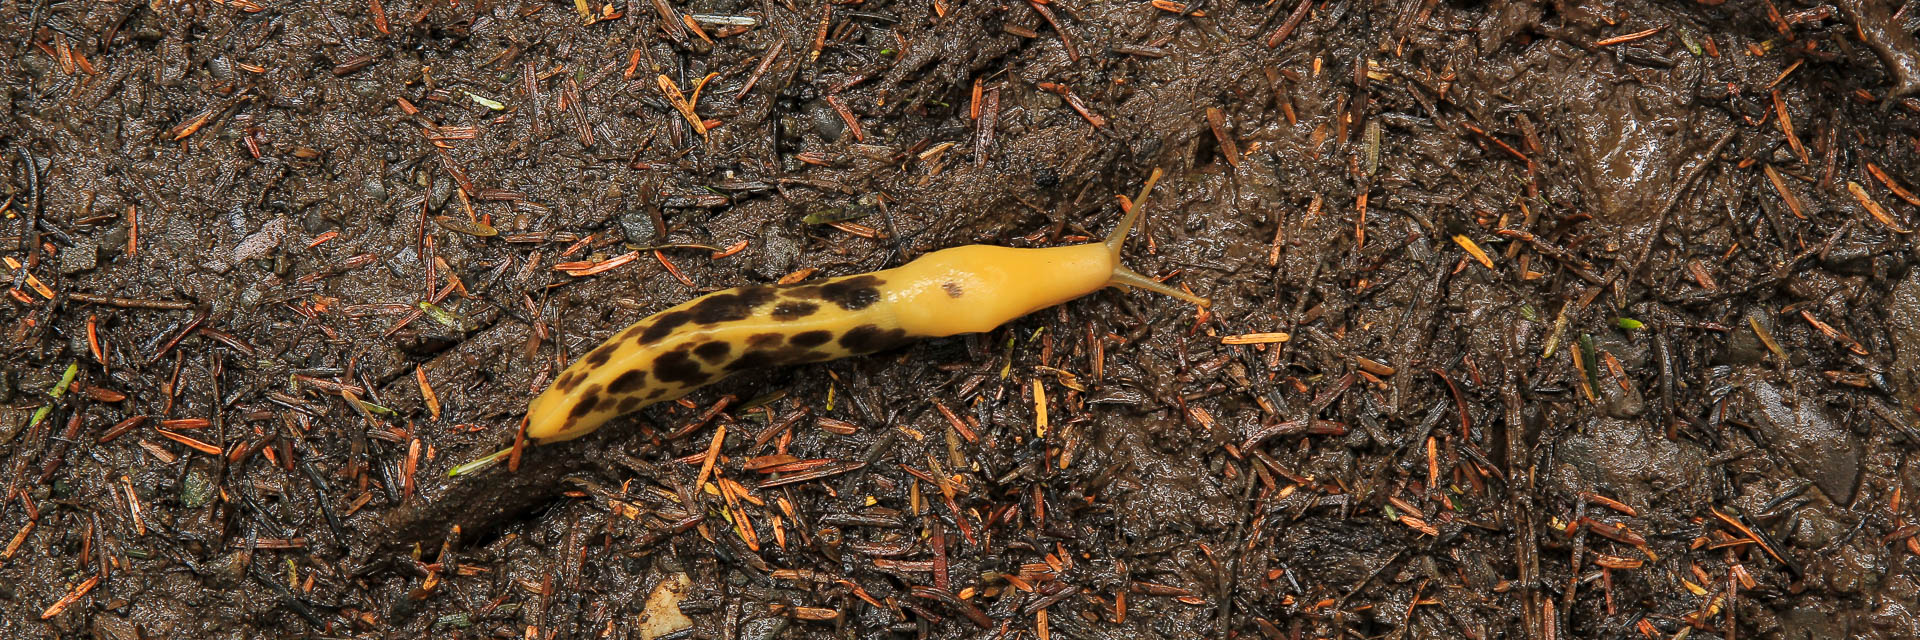 Race slug